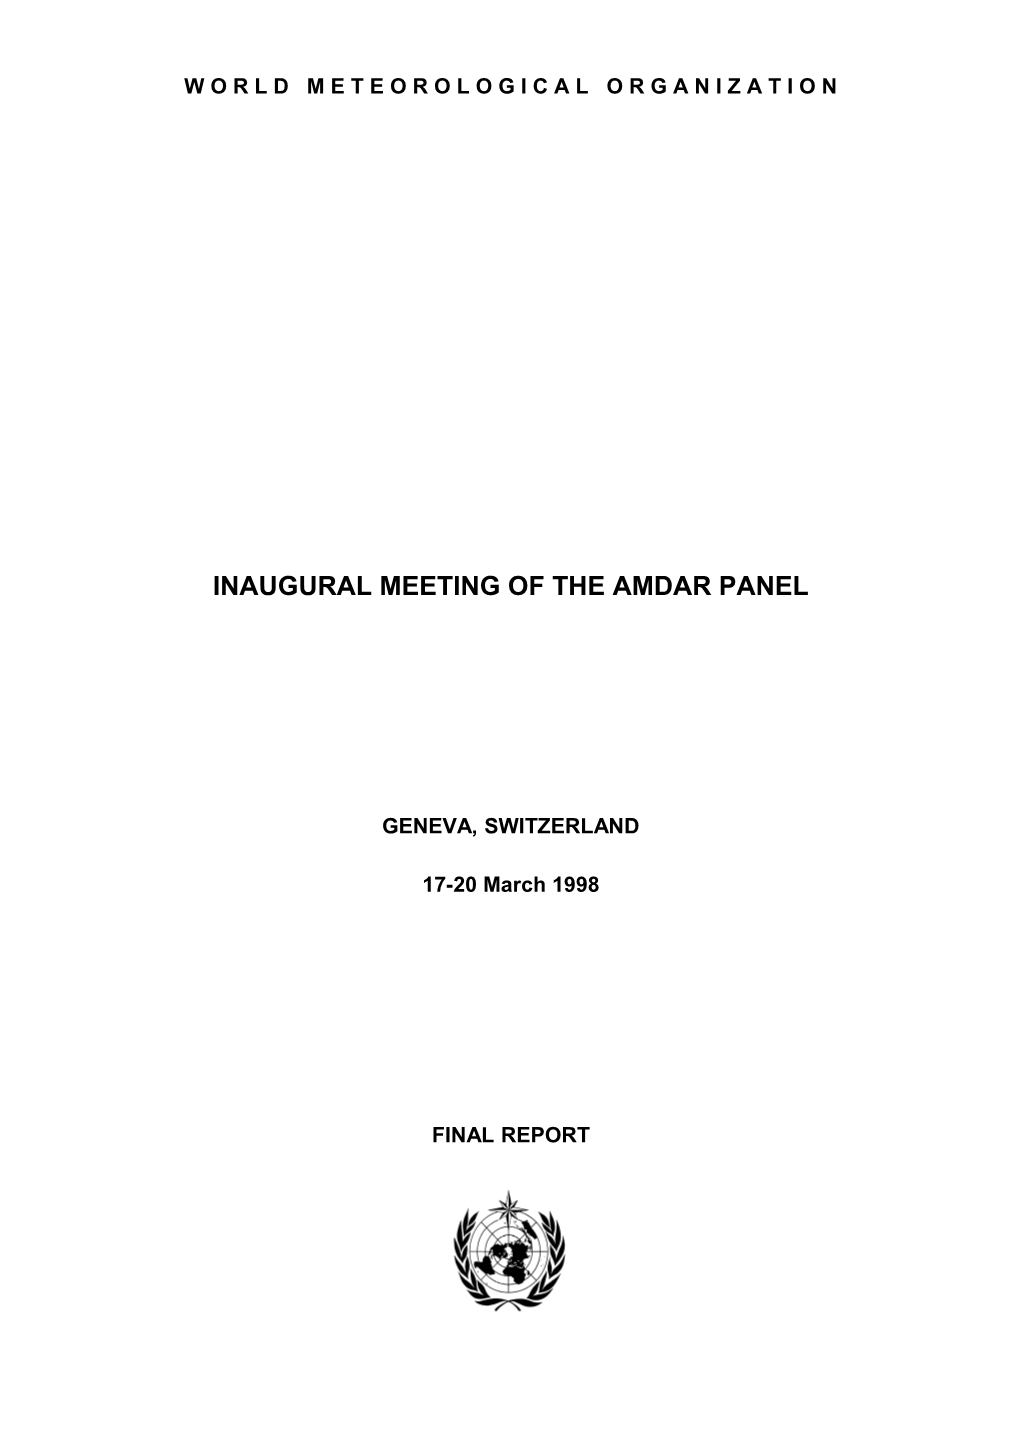 Inaugural Meeting of the Amdar Panel